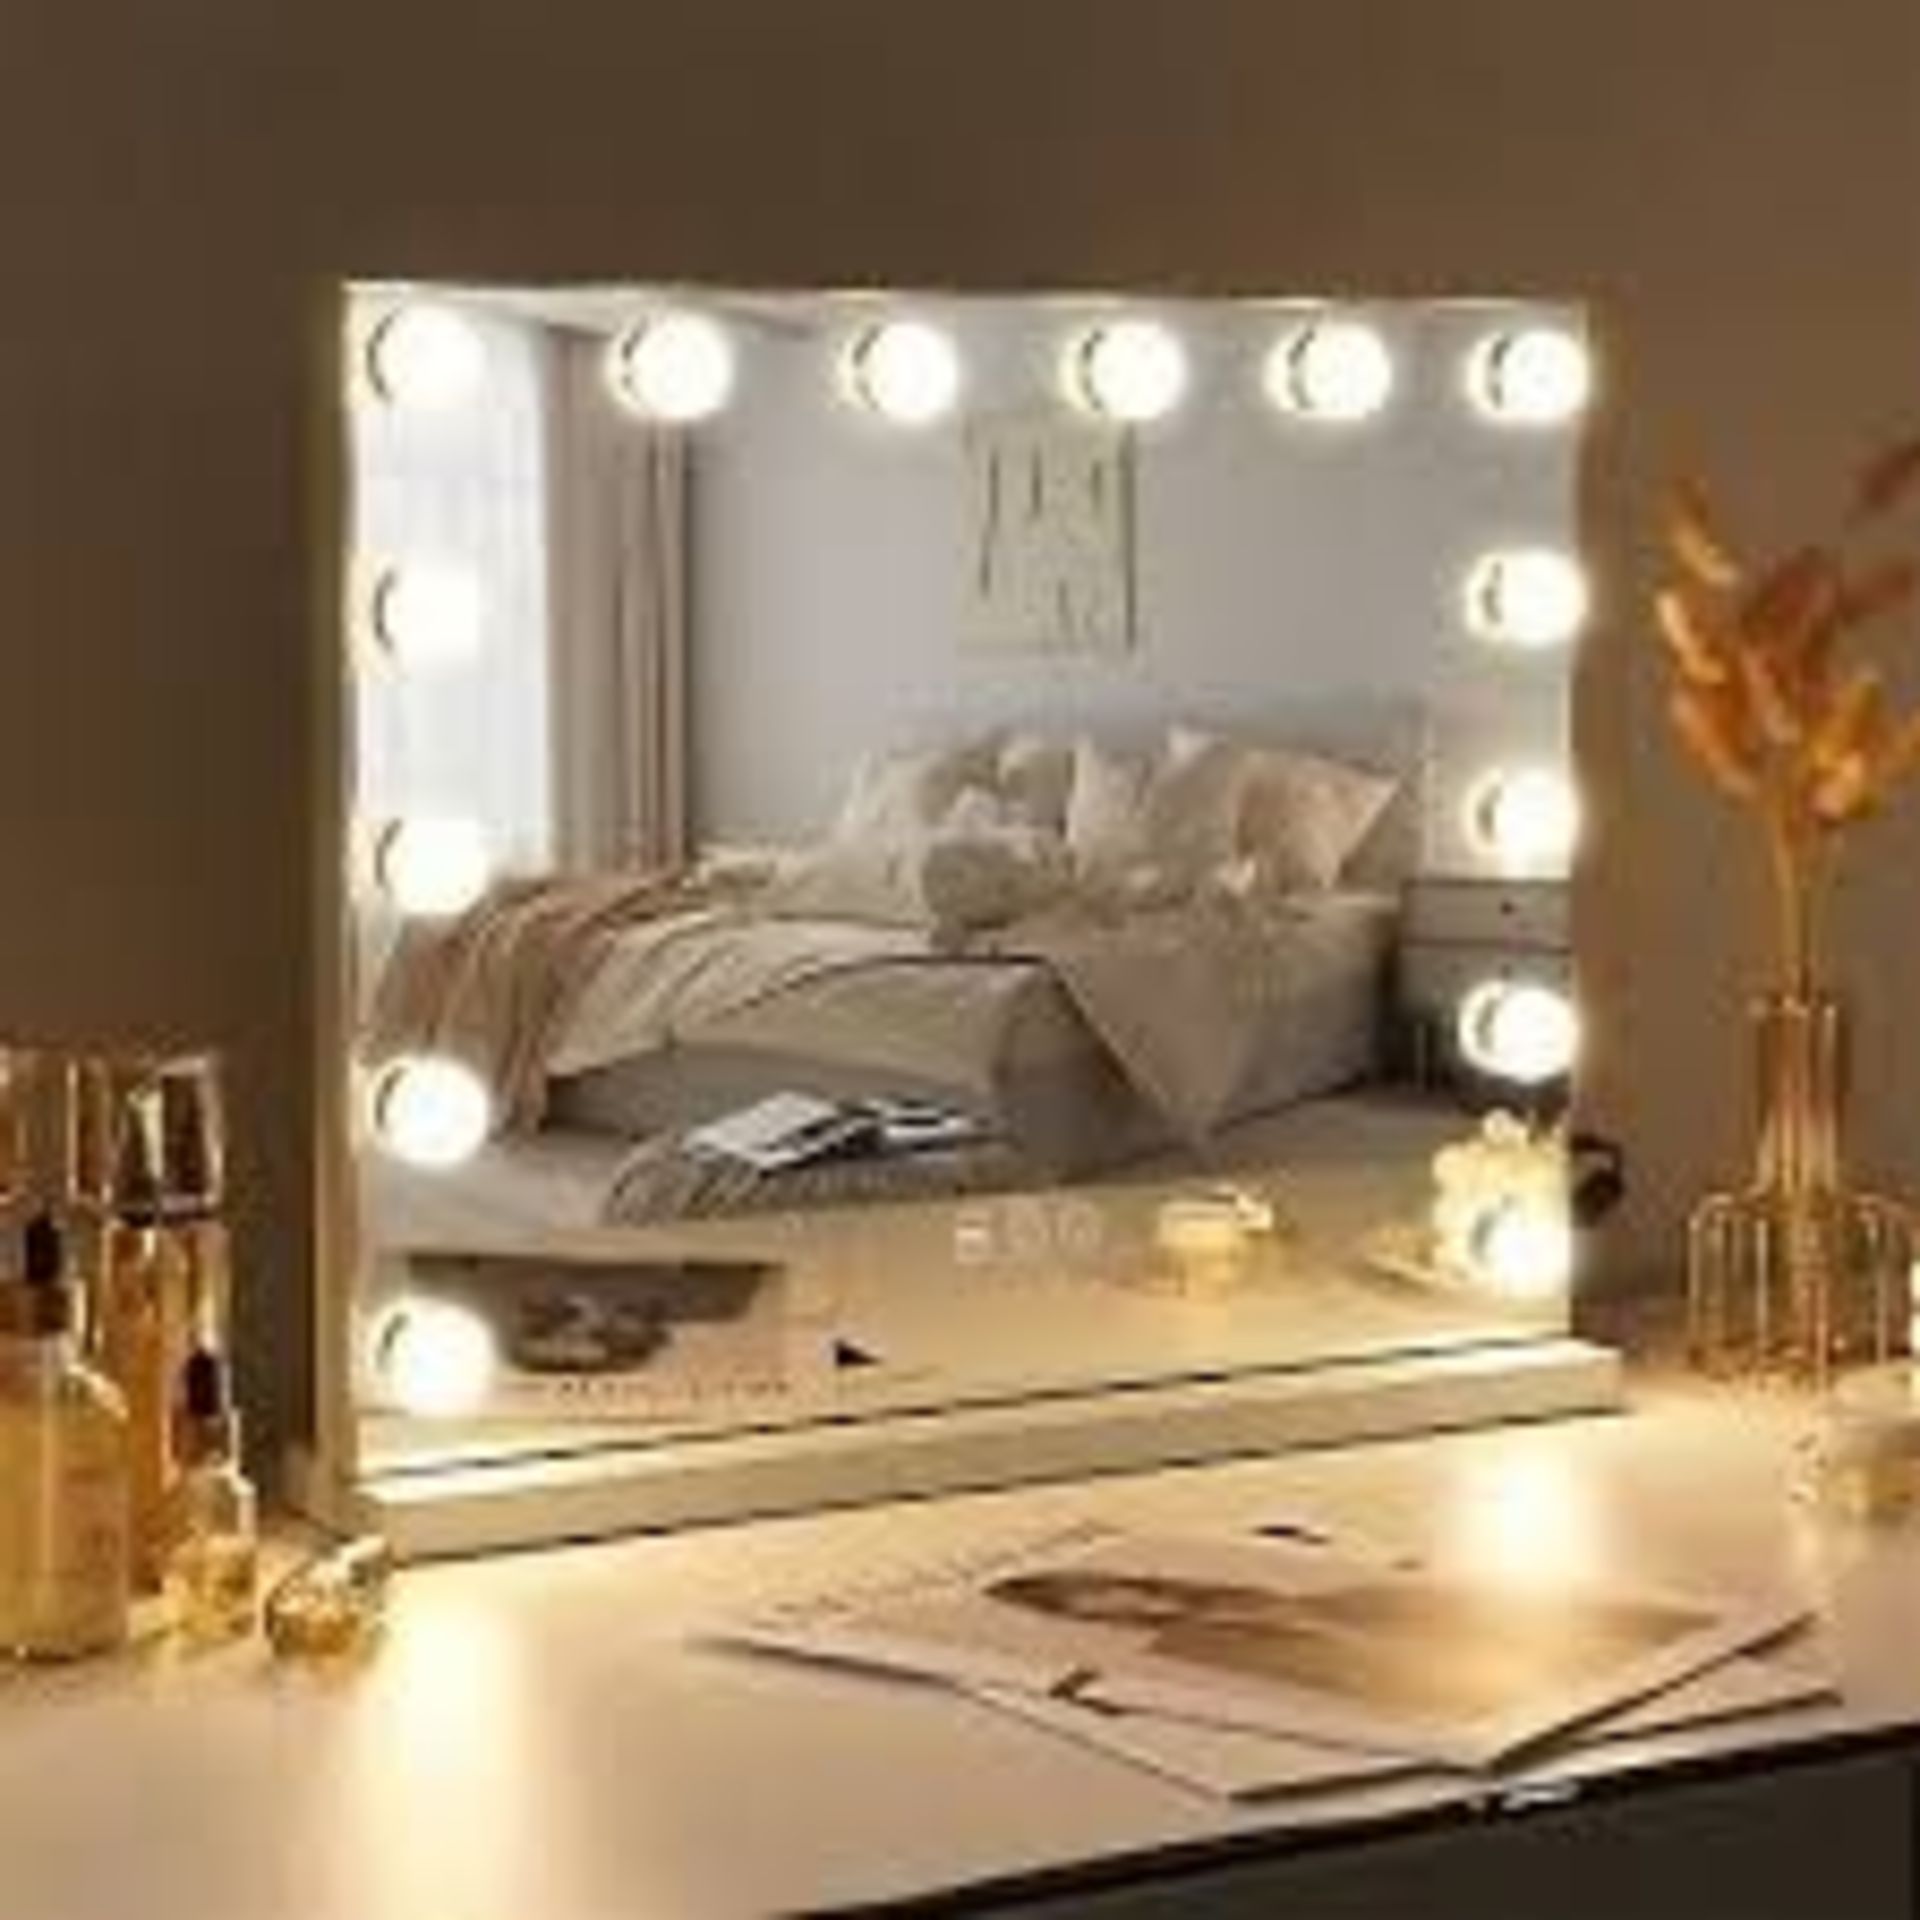 VANITII Hollywood Vanity Make Up Mirror with Lights. - R14.17.